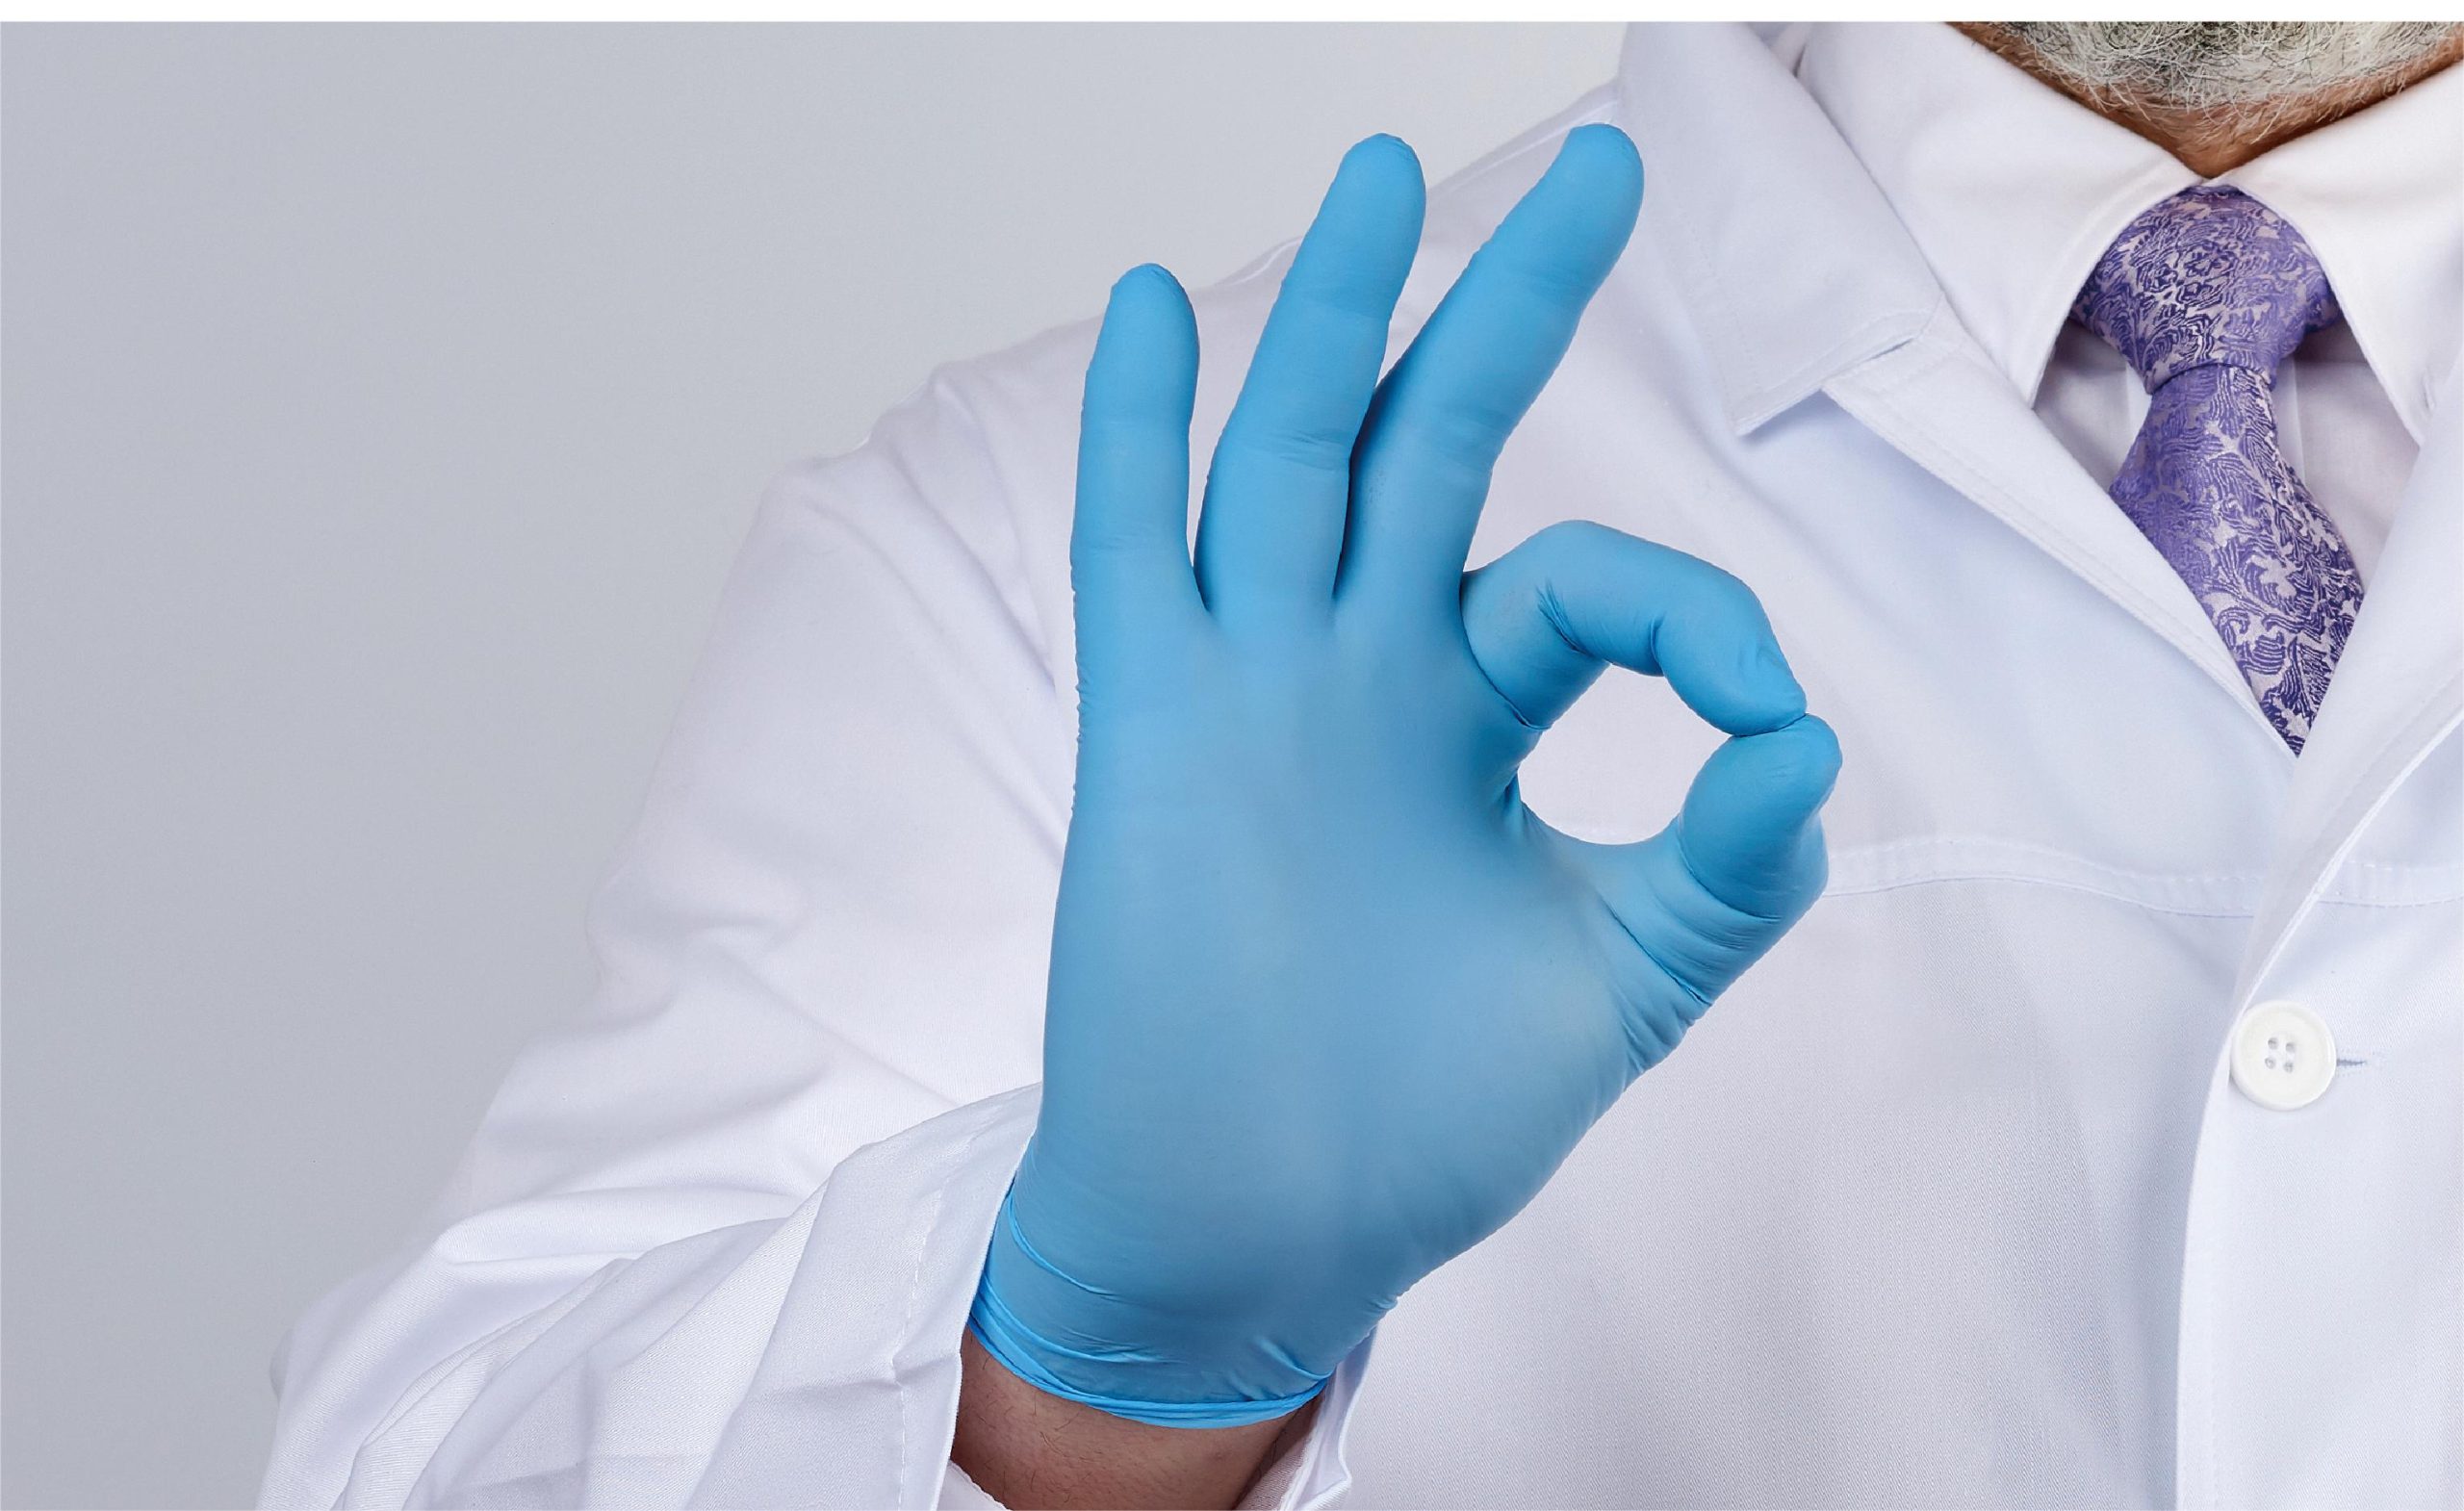 INTCO Medical Sterile Nitrile Exam Gloves: Avoid Cross Infection